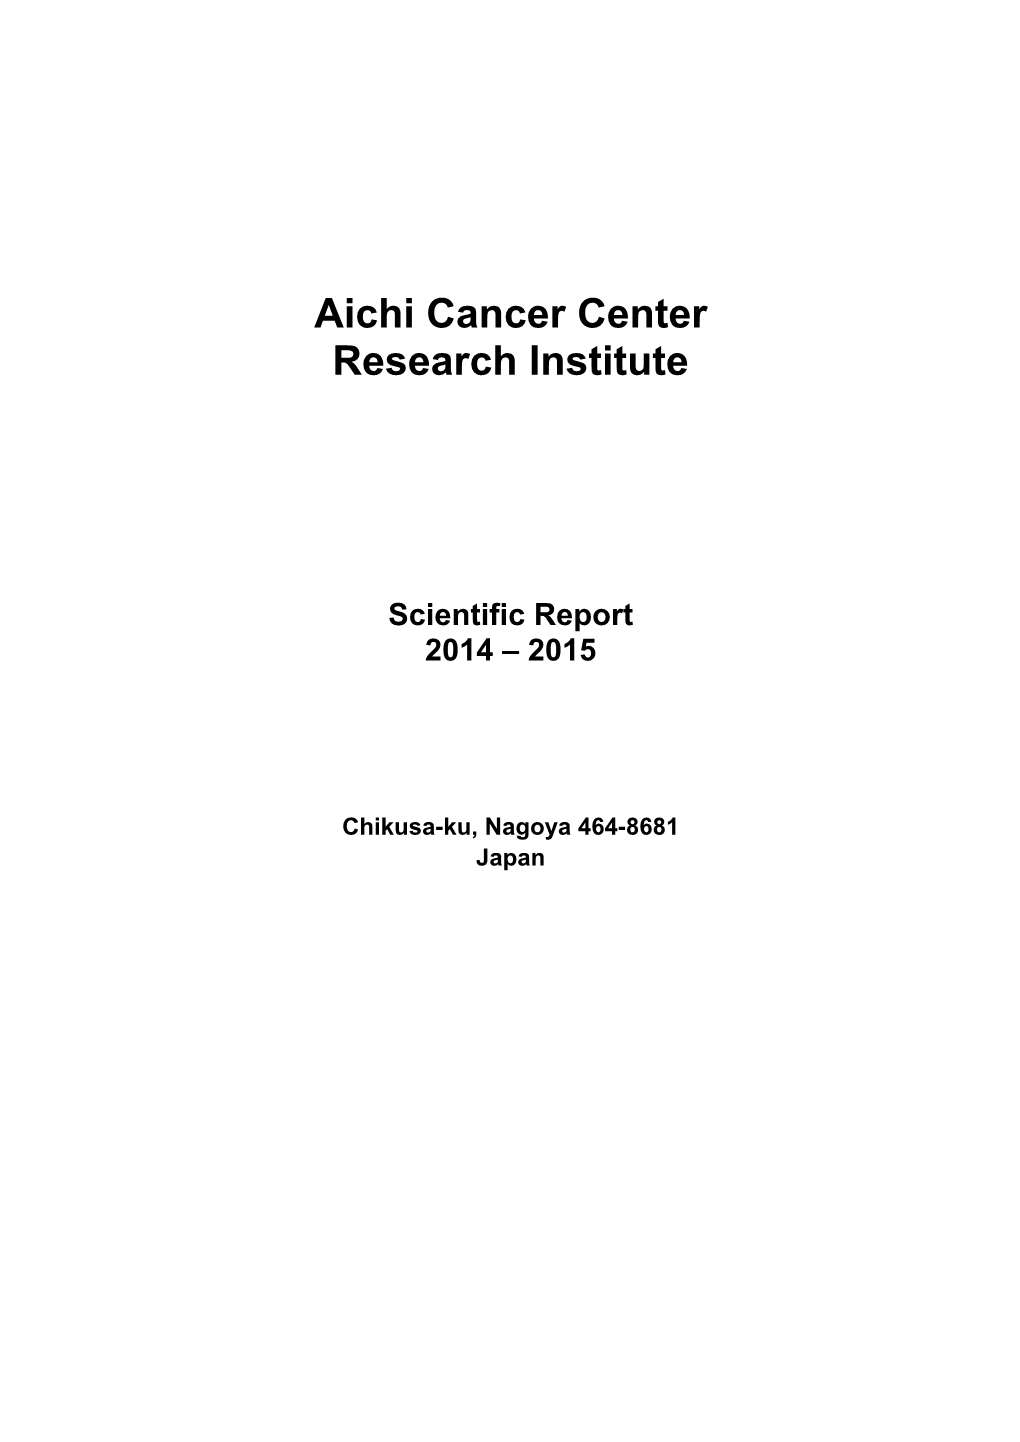 2014-2015) of the Aichi Cancer Center Research Institute